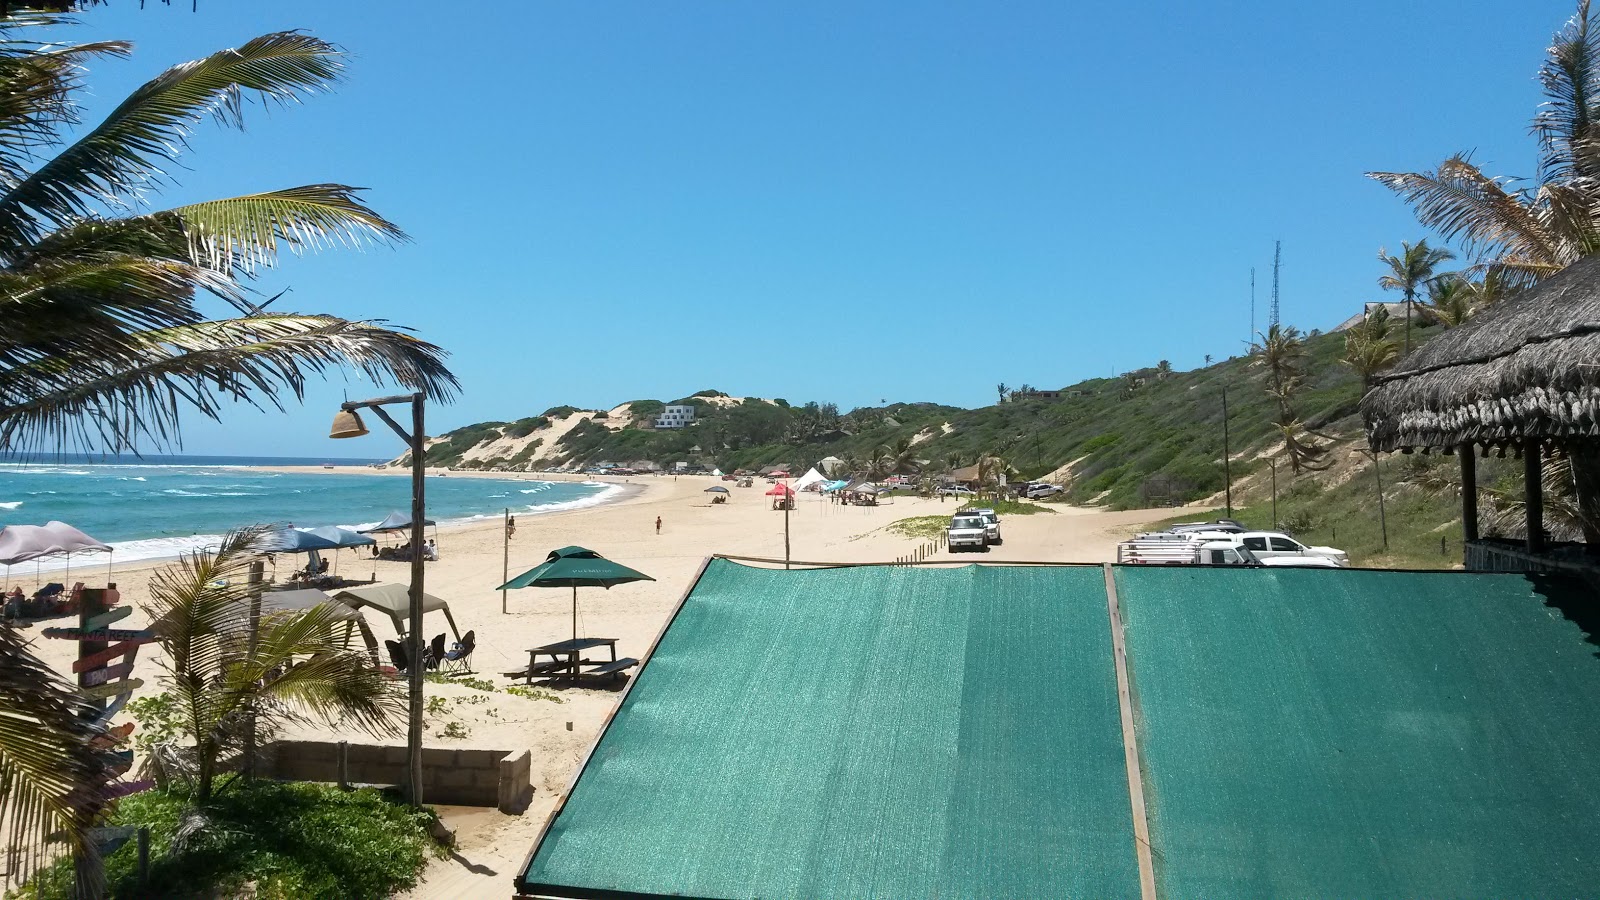 Foto av Praia de Jangamo med hög nivå av renlighet